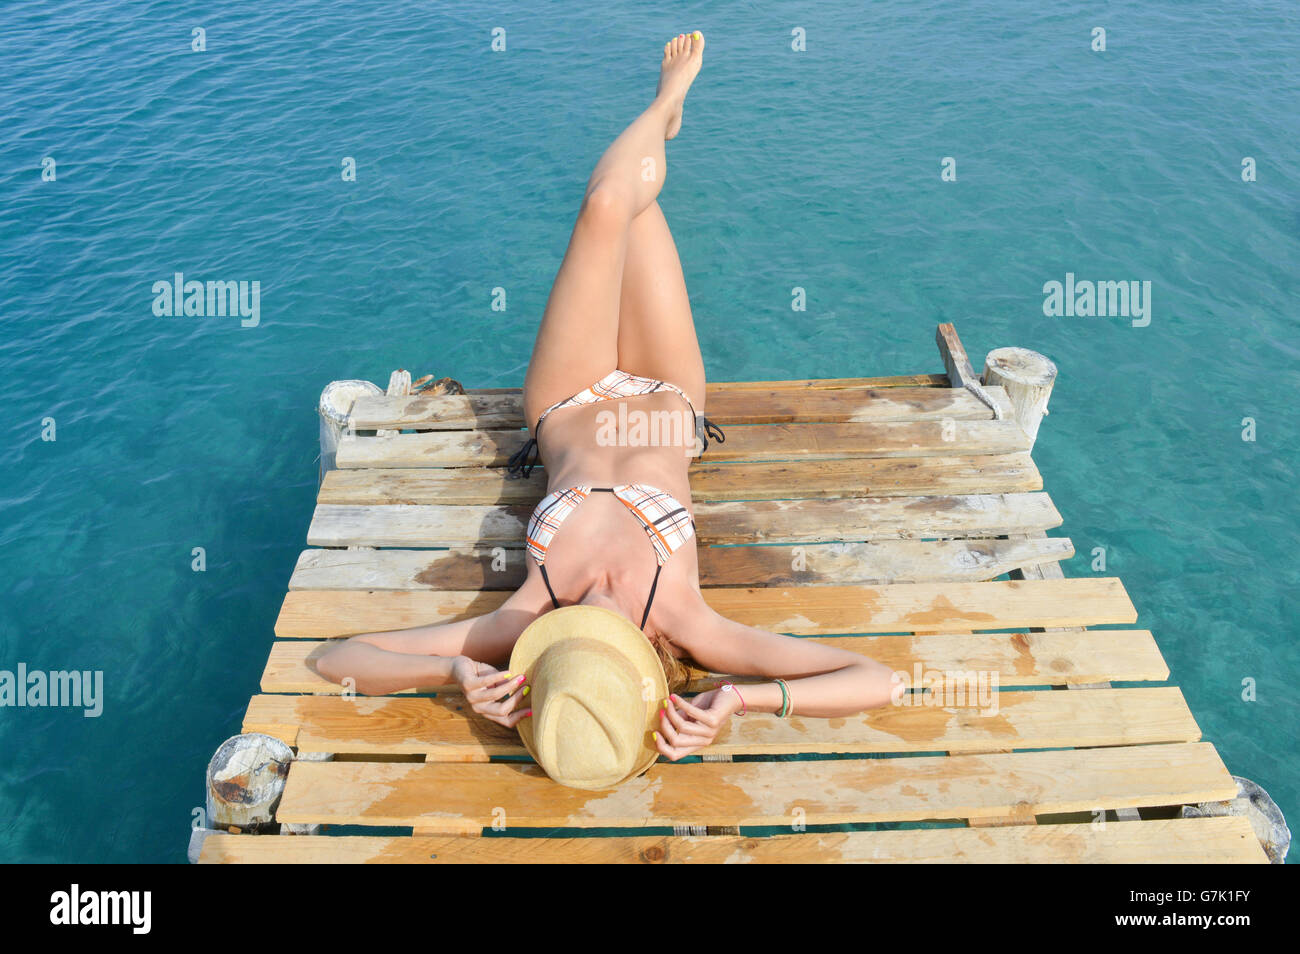 Bikini bridge hi-res stock photography and images - Alamy